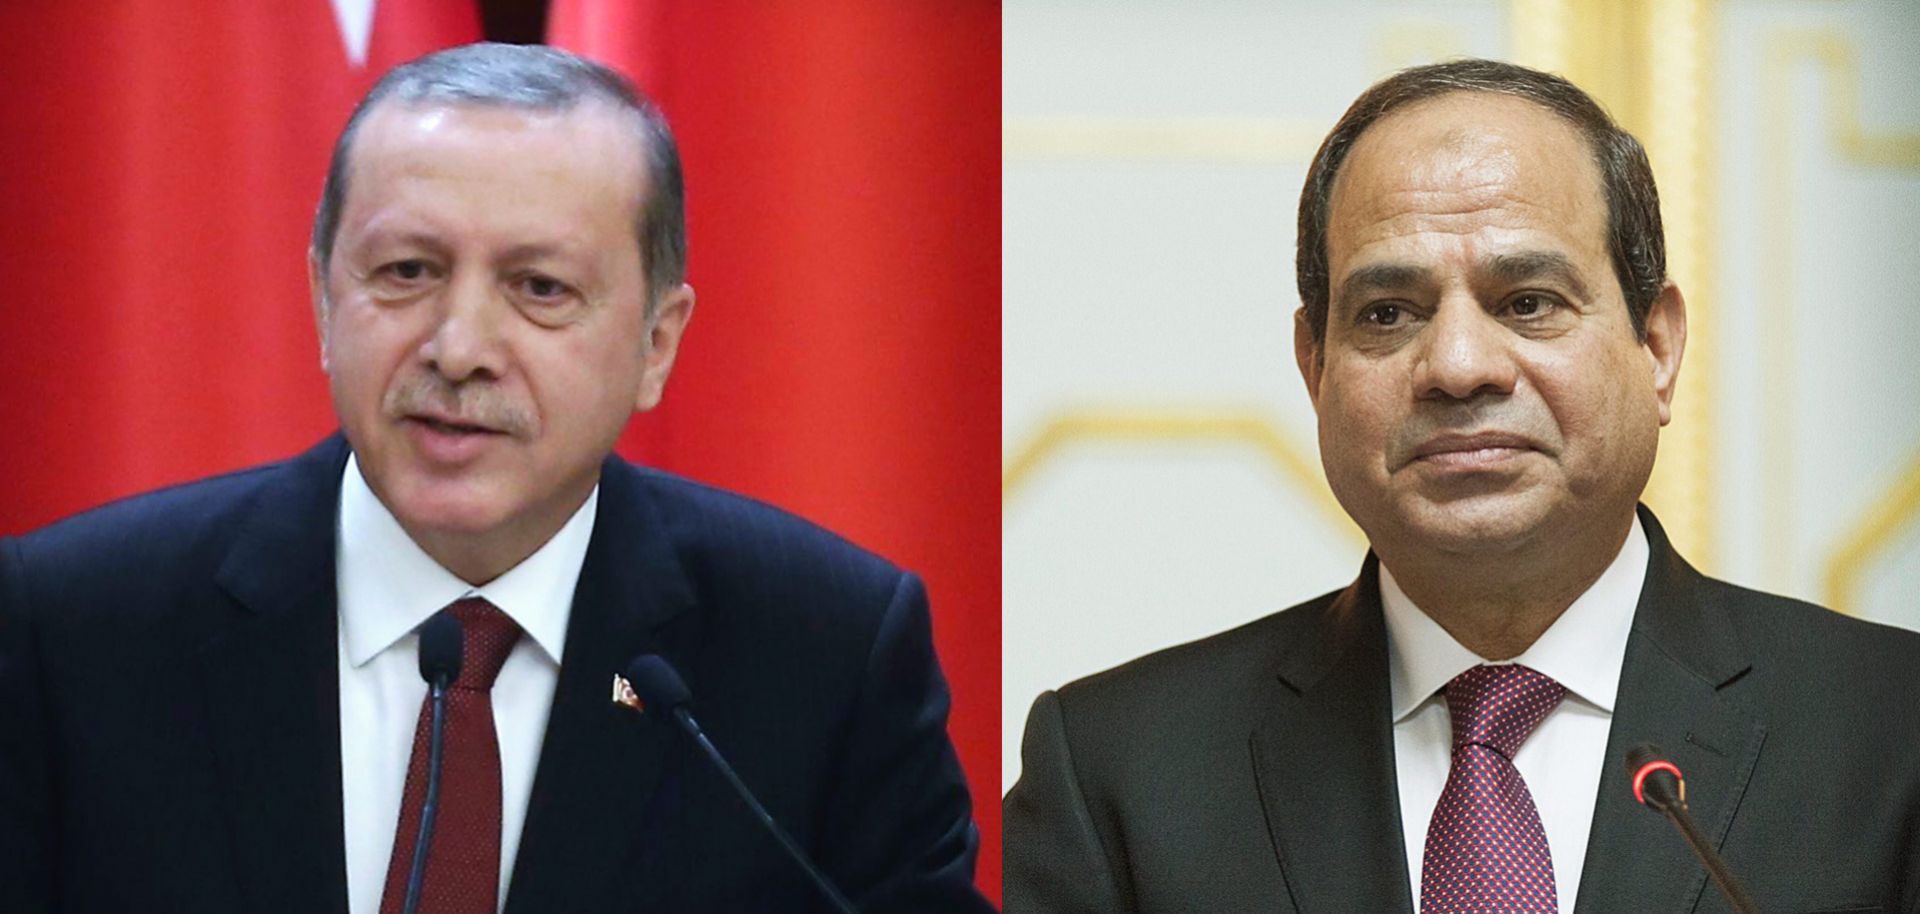 Turkish President Recep Tayyip Erdogan (L) and Egyptian President Abdel Fatah al-Sisi.